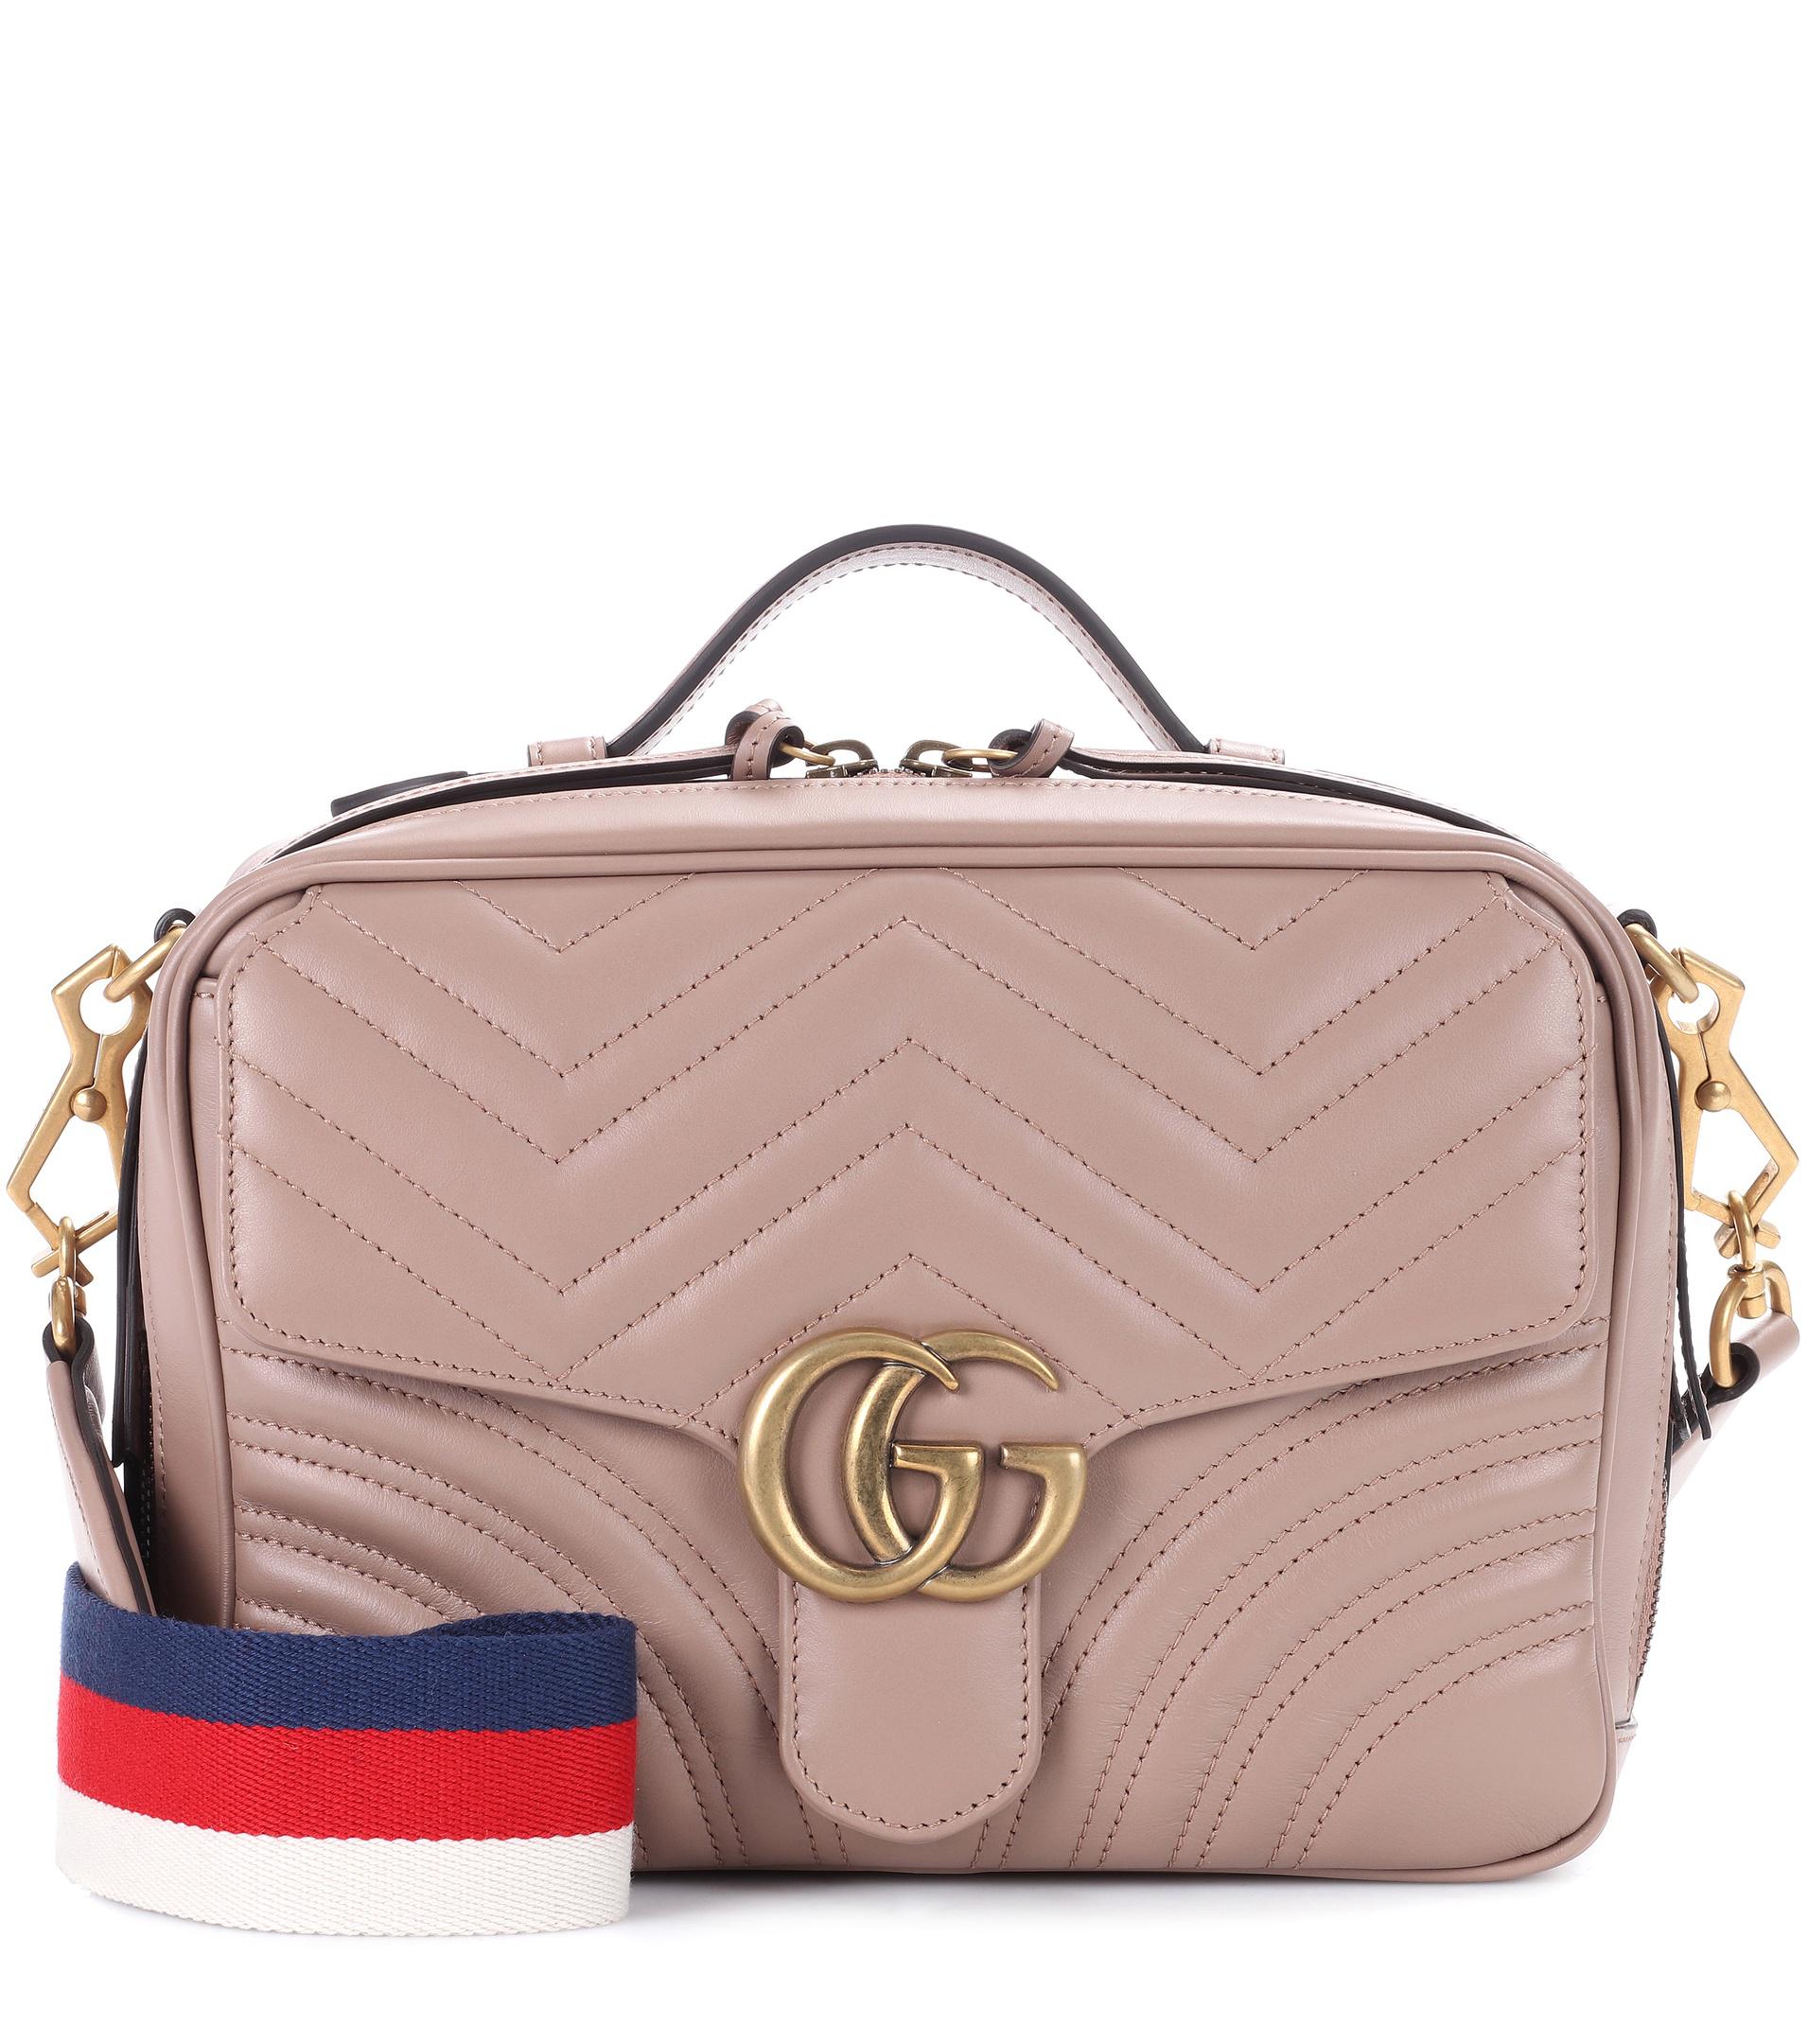 Gucci Gg Marmont Matelassé Leather Shoulder Bag in Natural | Lyst